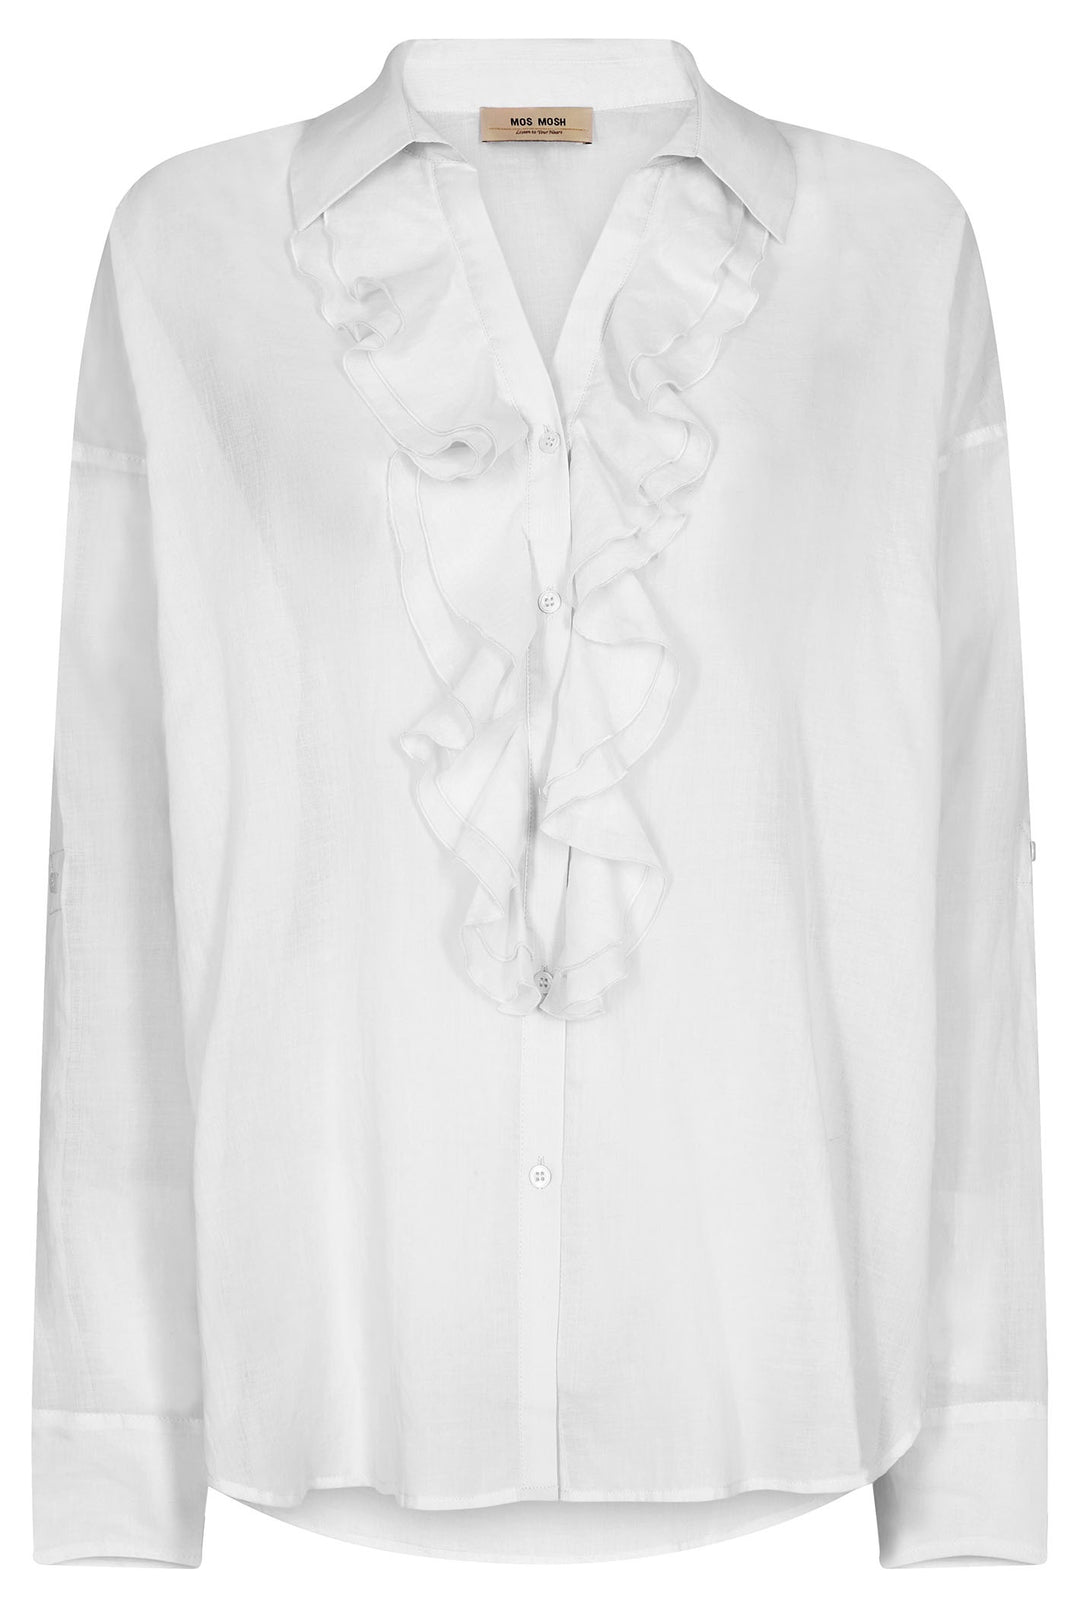 Mos Mosh 153740 MMJelena White Ruffle Front Voile Shirt - Dotique Boutique